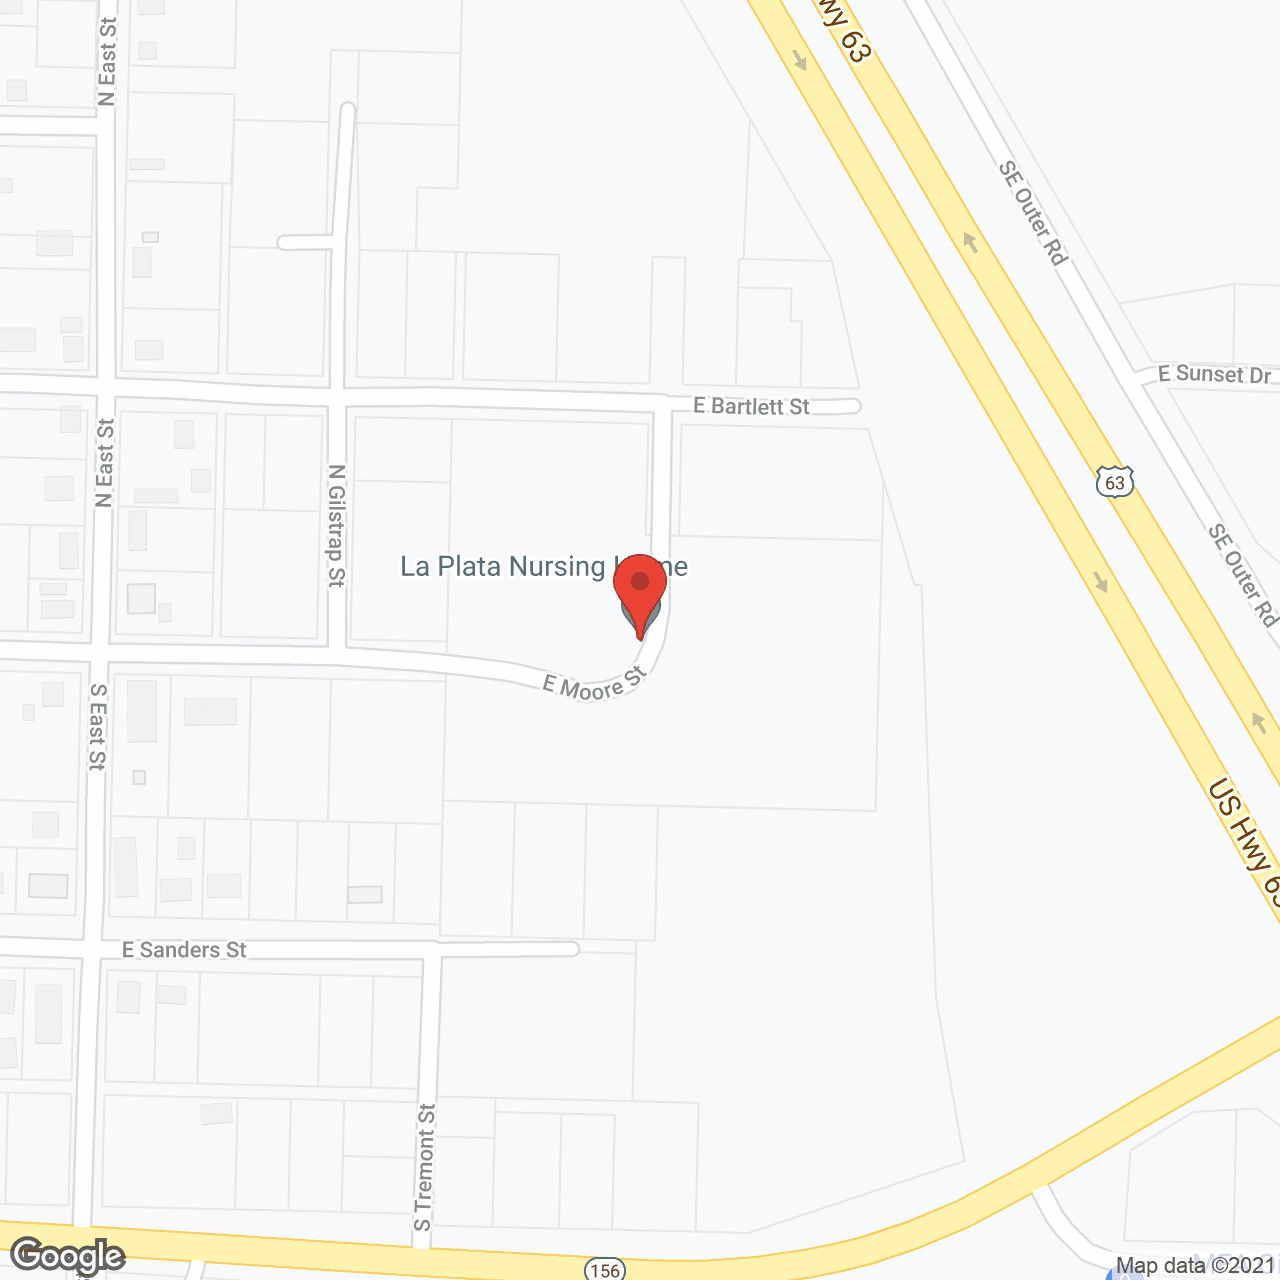 La Plata Nursing Home in google map